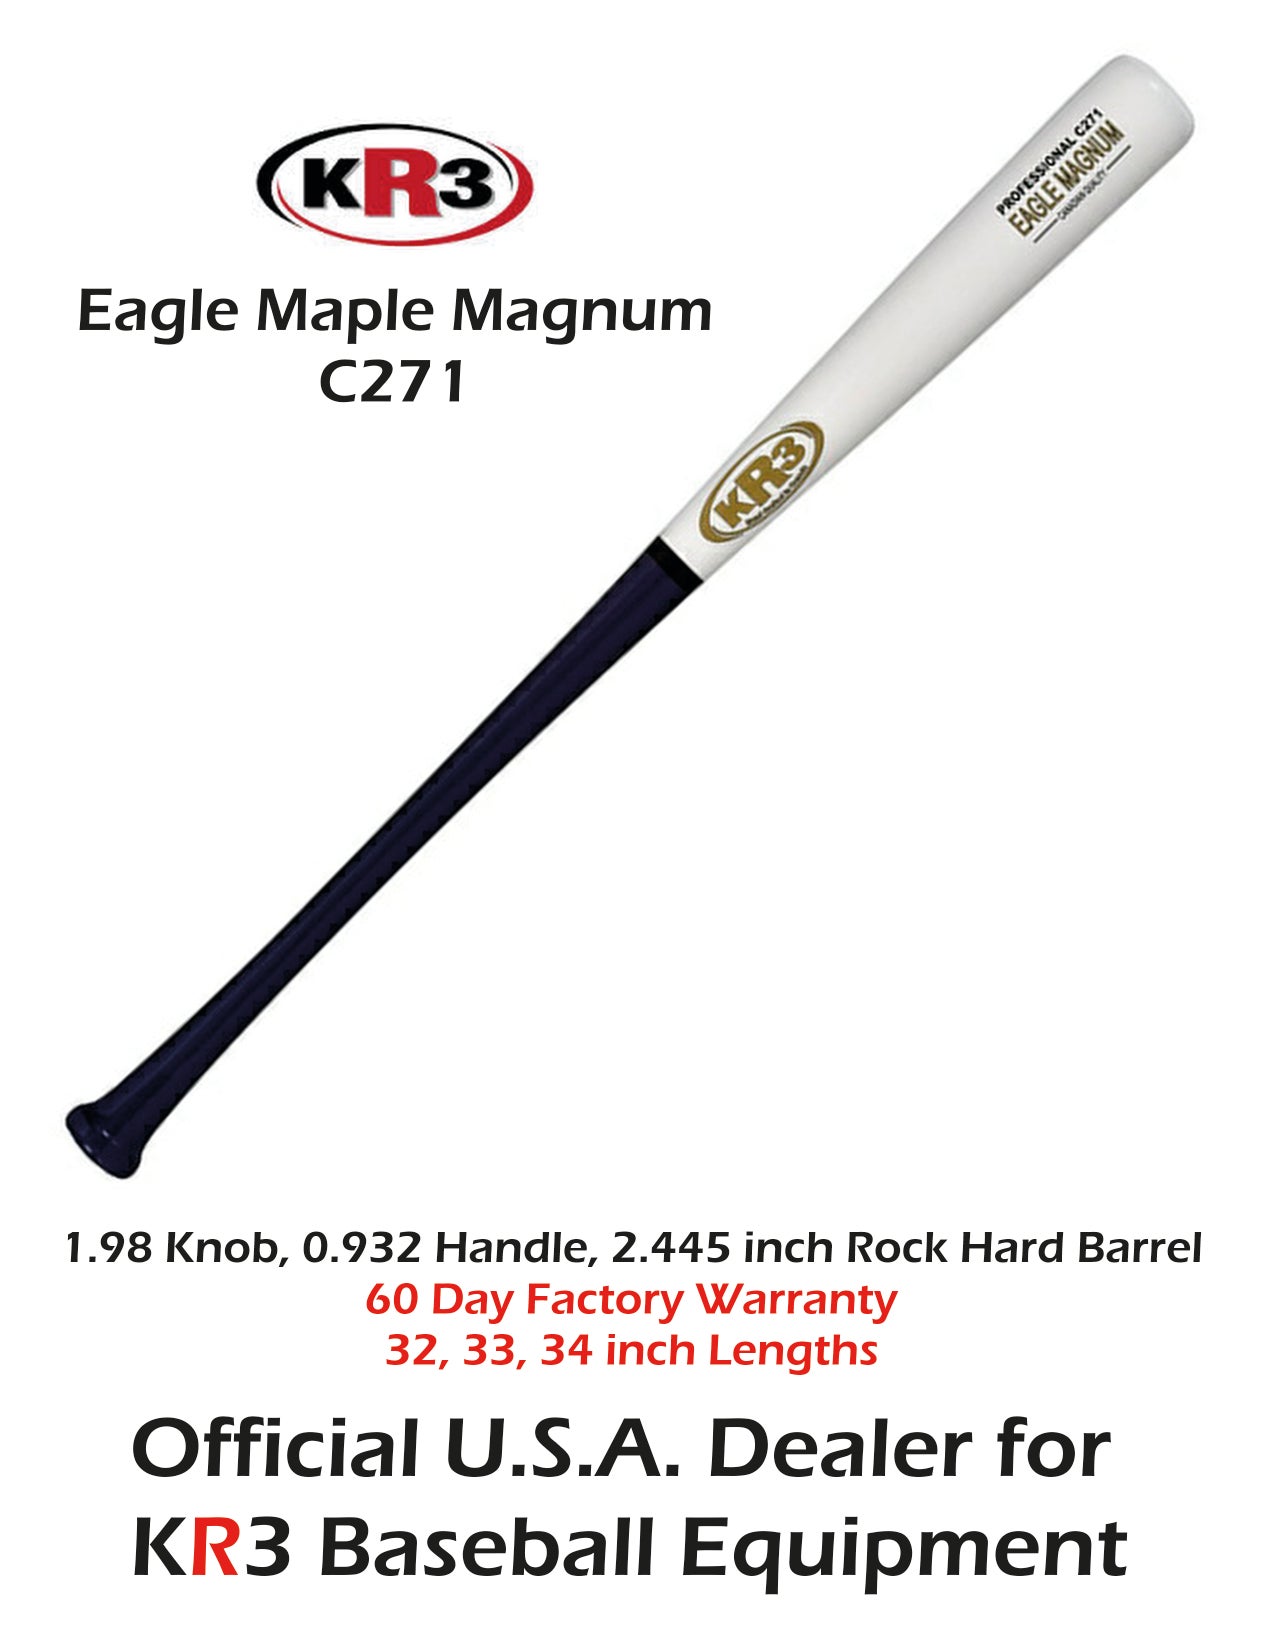 New 2023 KR3 Eagle Maple Magnum 34 inch Wood Bat (-3) 31.5 oz C271